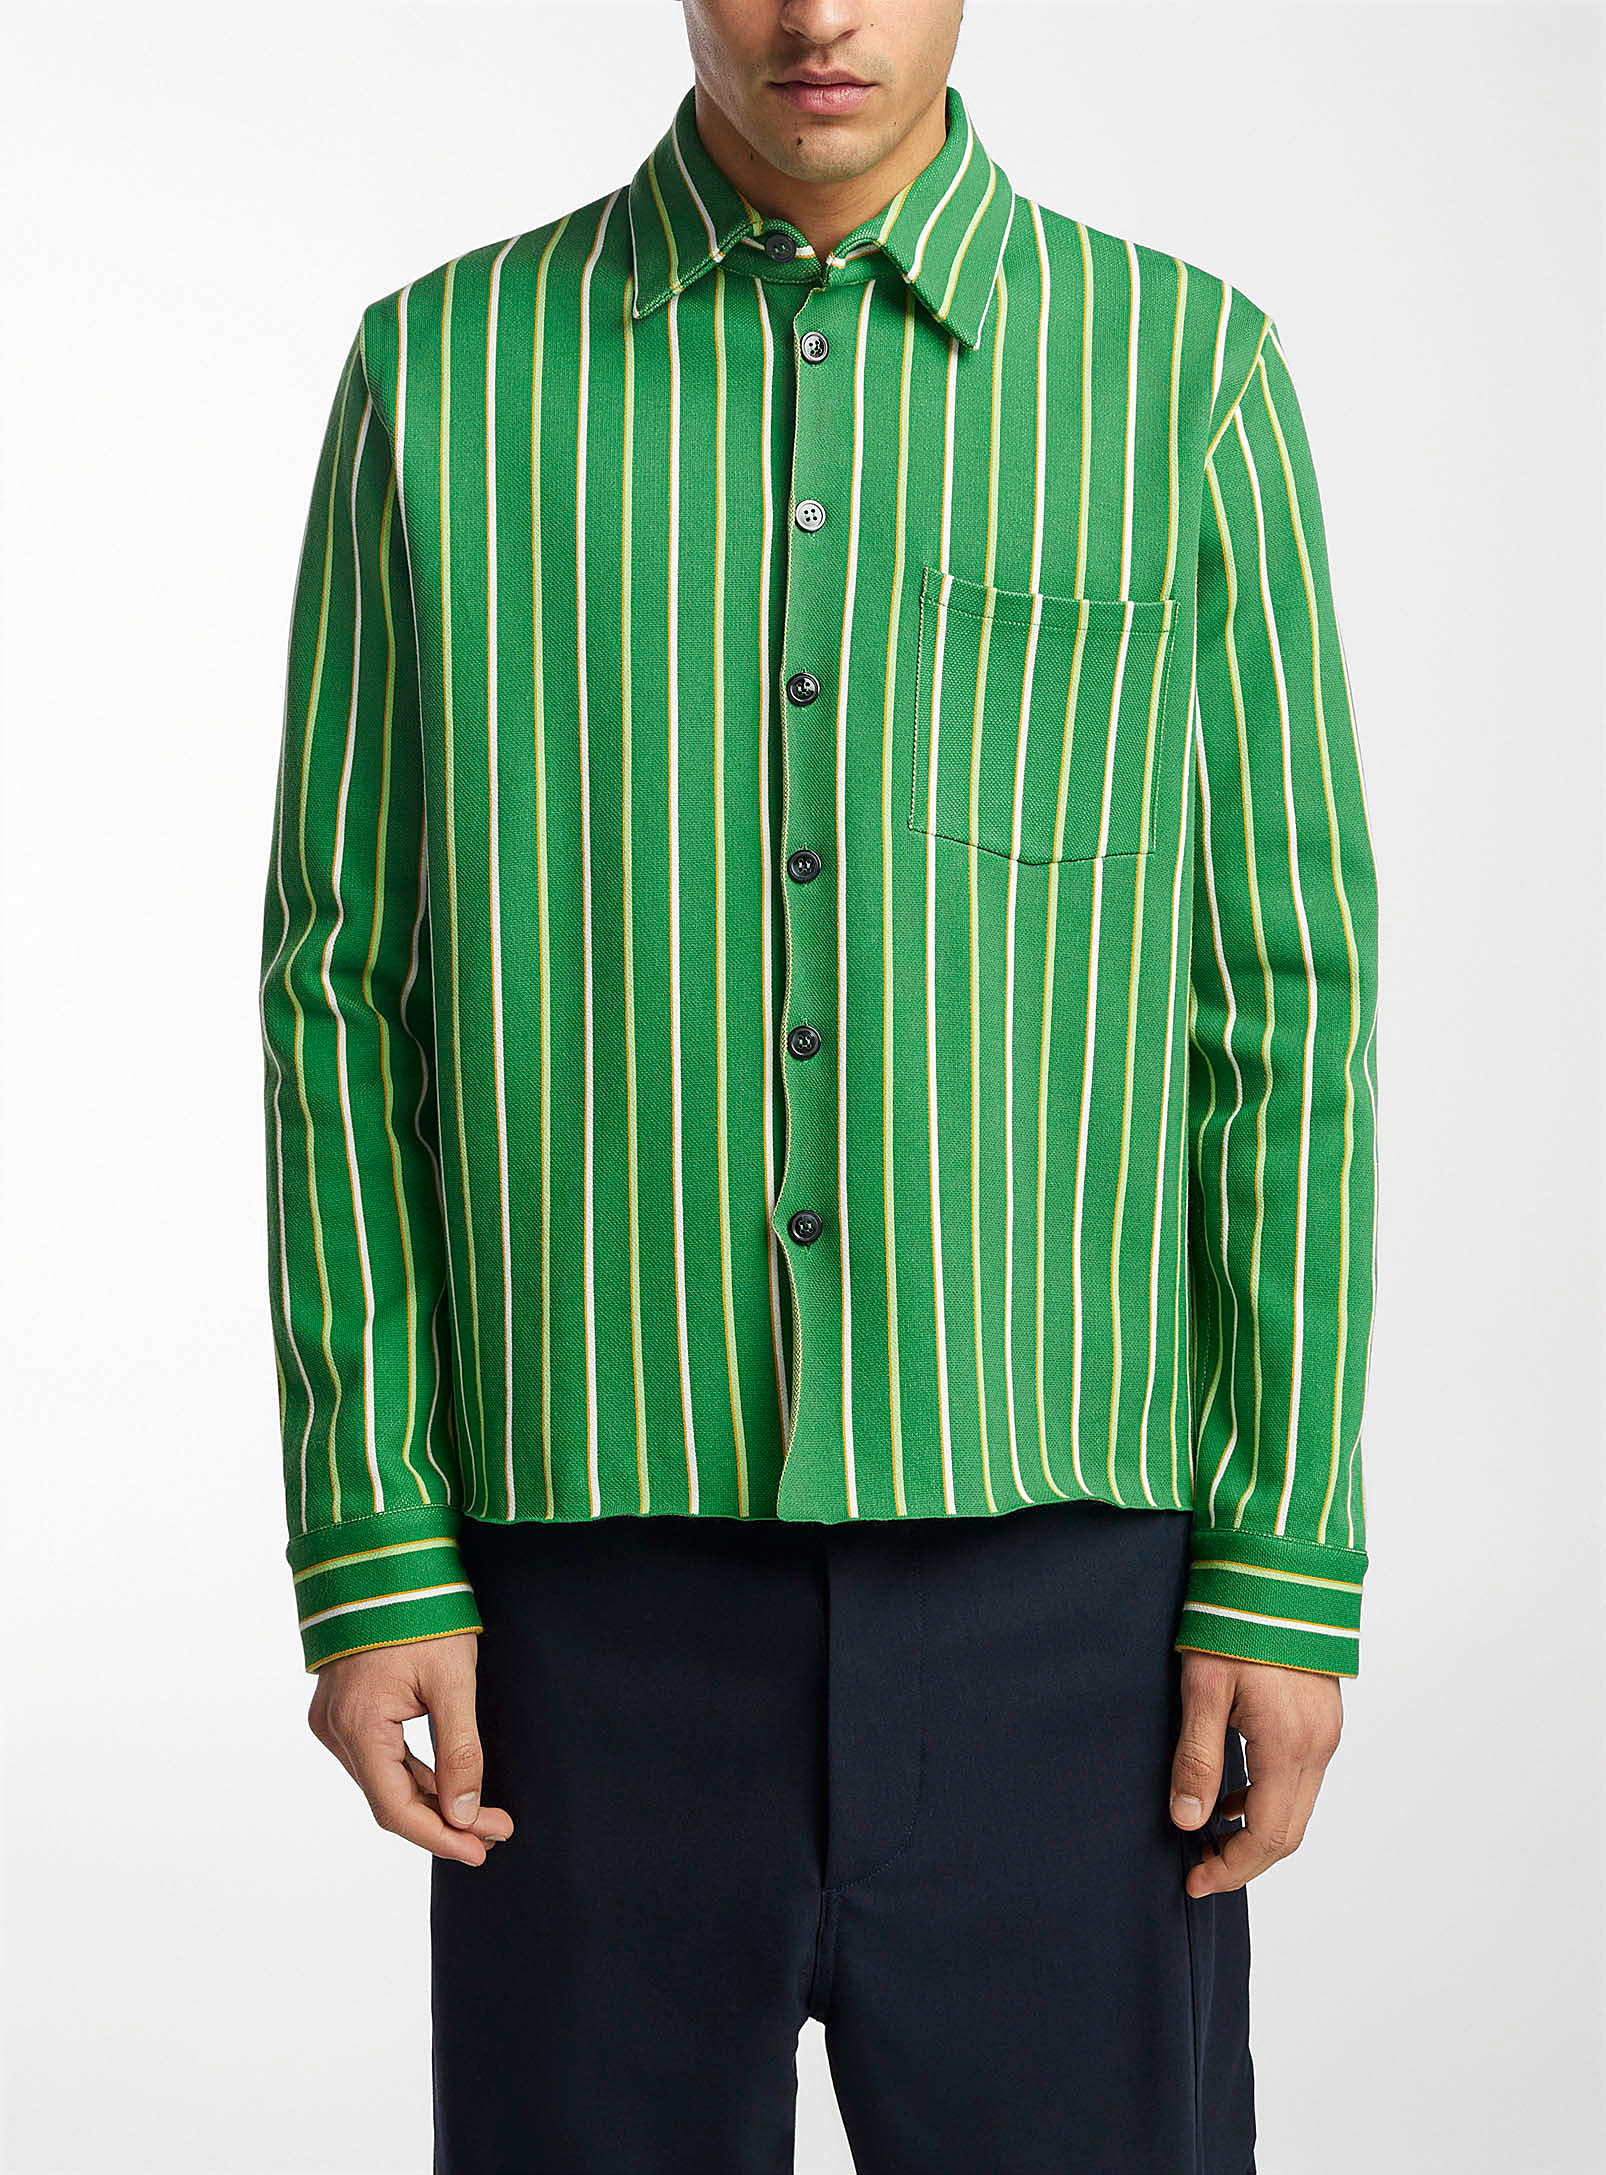 MARNI - Men's Techno knit striped shirt